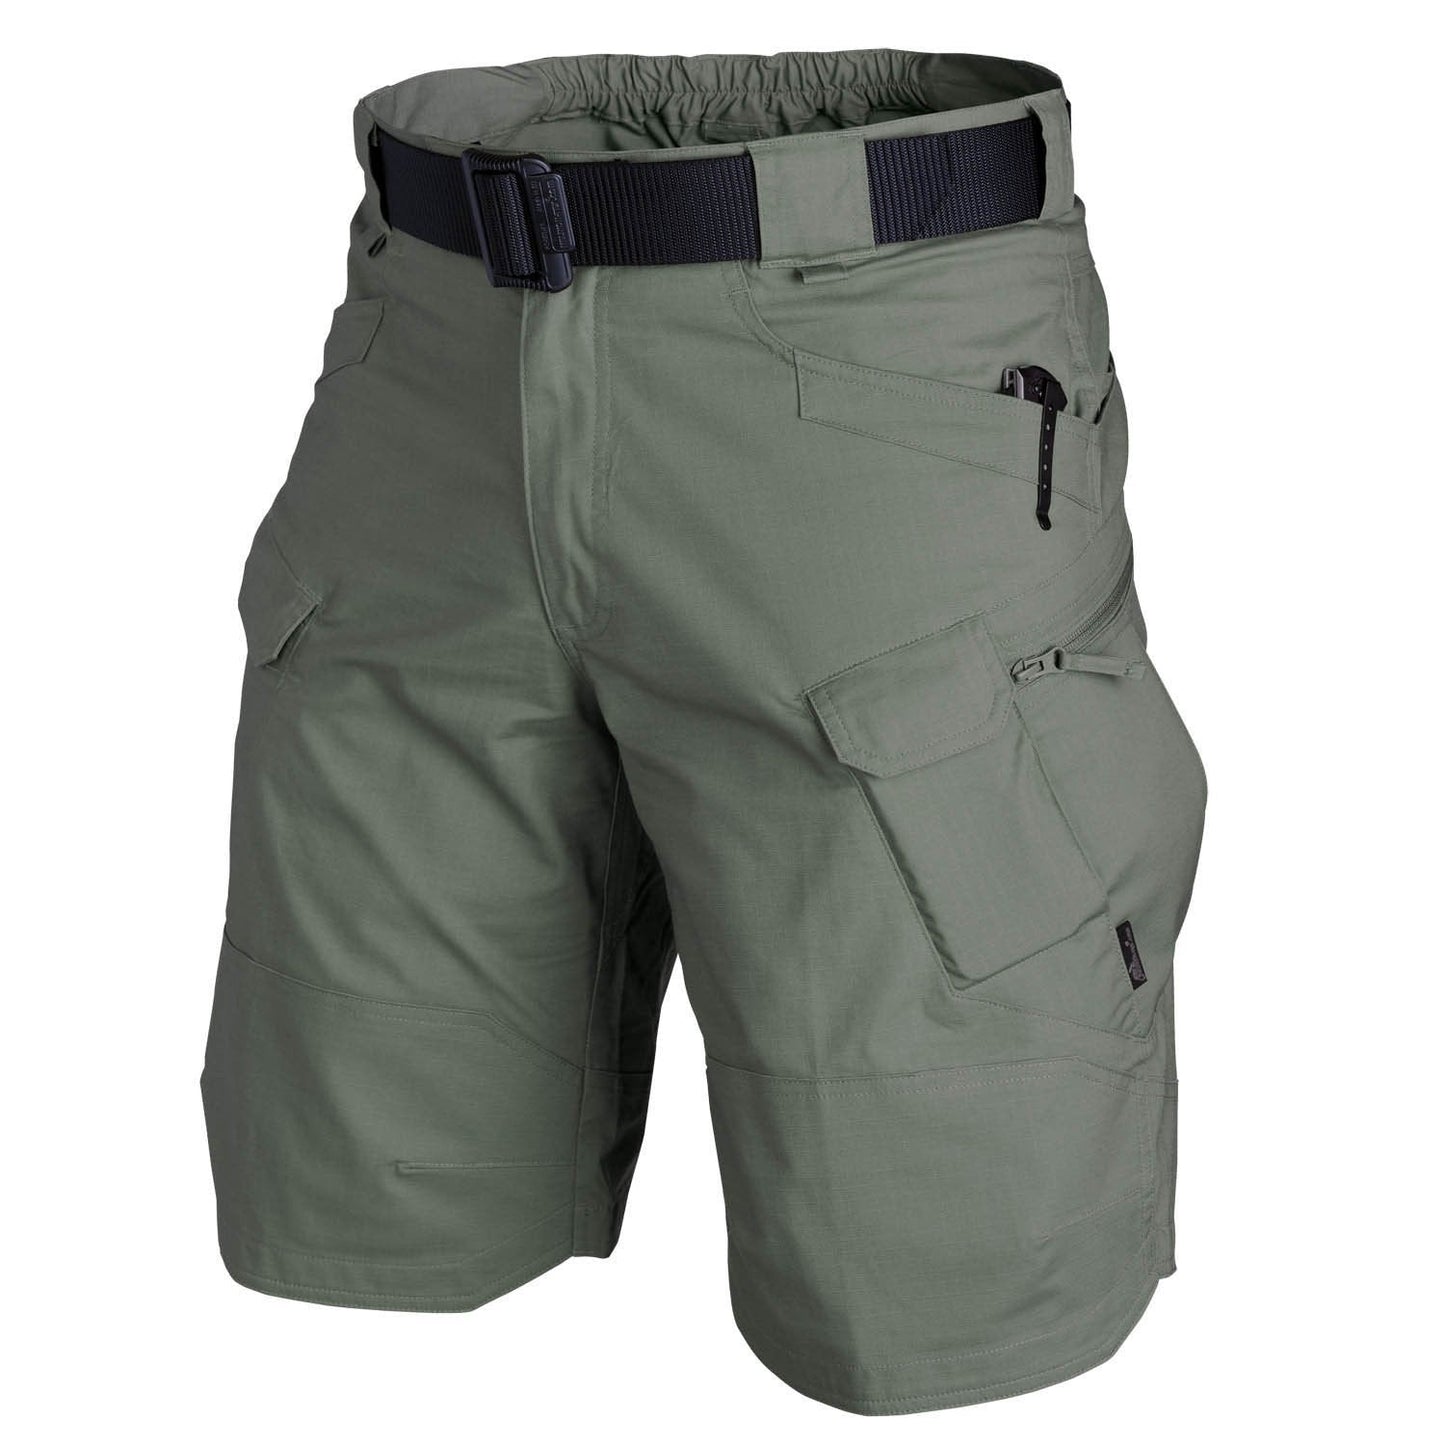 (ONLY $28.95 ) - IX9 Summer Comfortable Waterproof Shorts